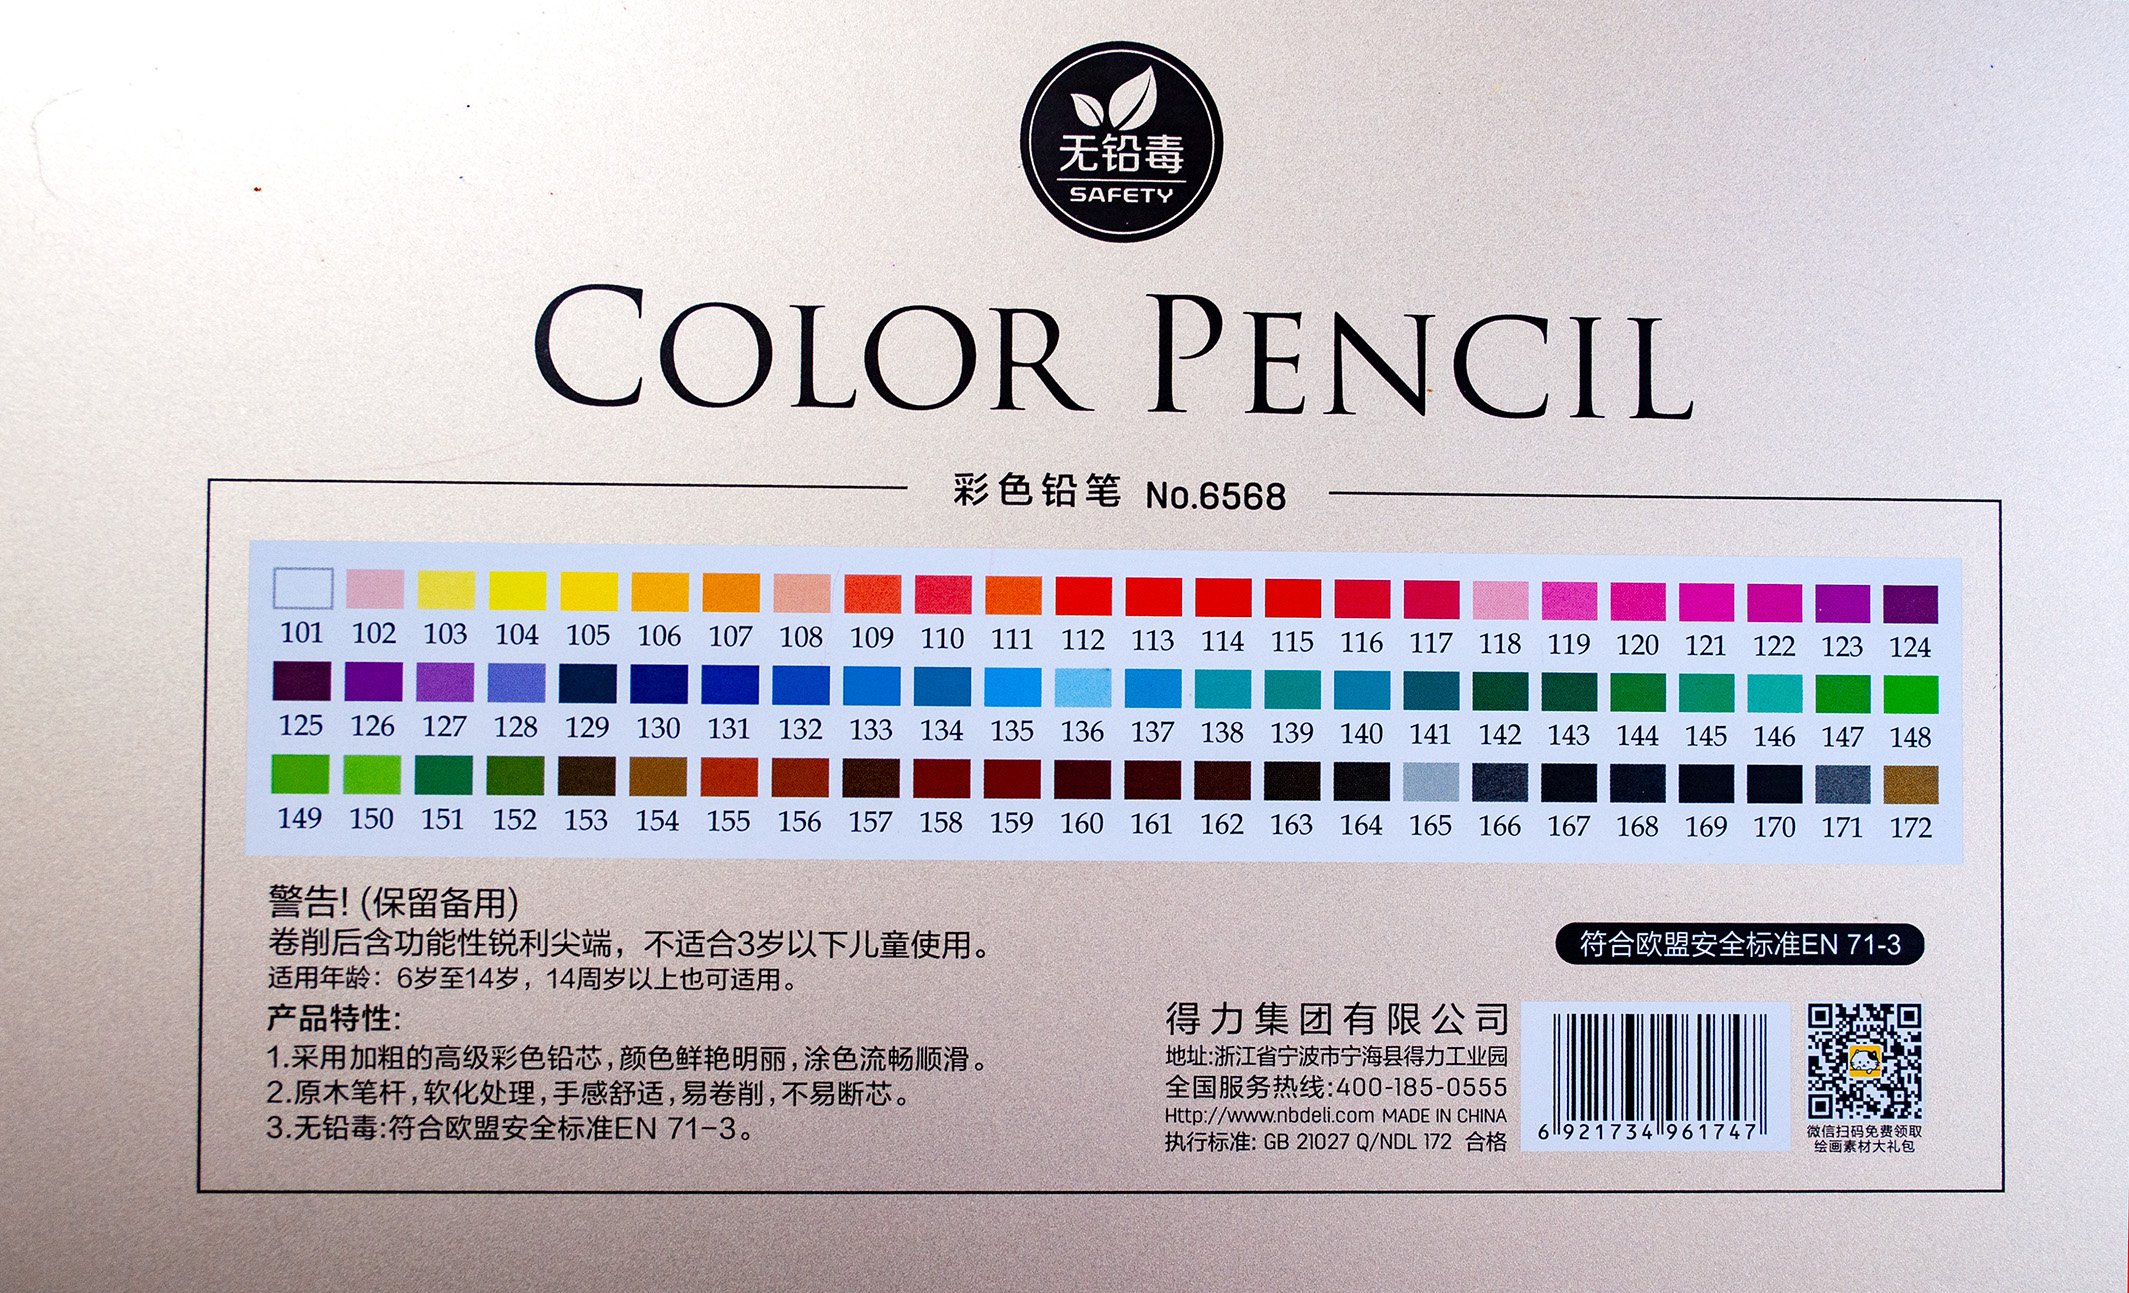 CHEAPER Polychromos Alternative? 🖍️ Oil Based Colored Pencils